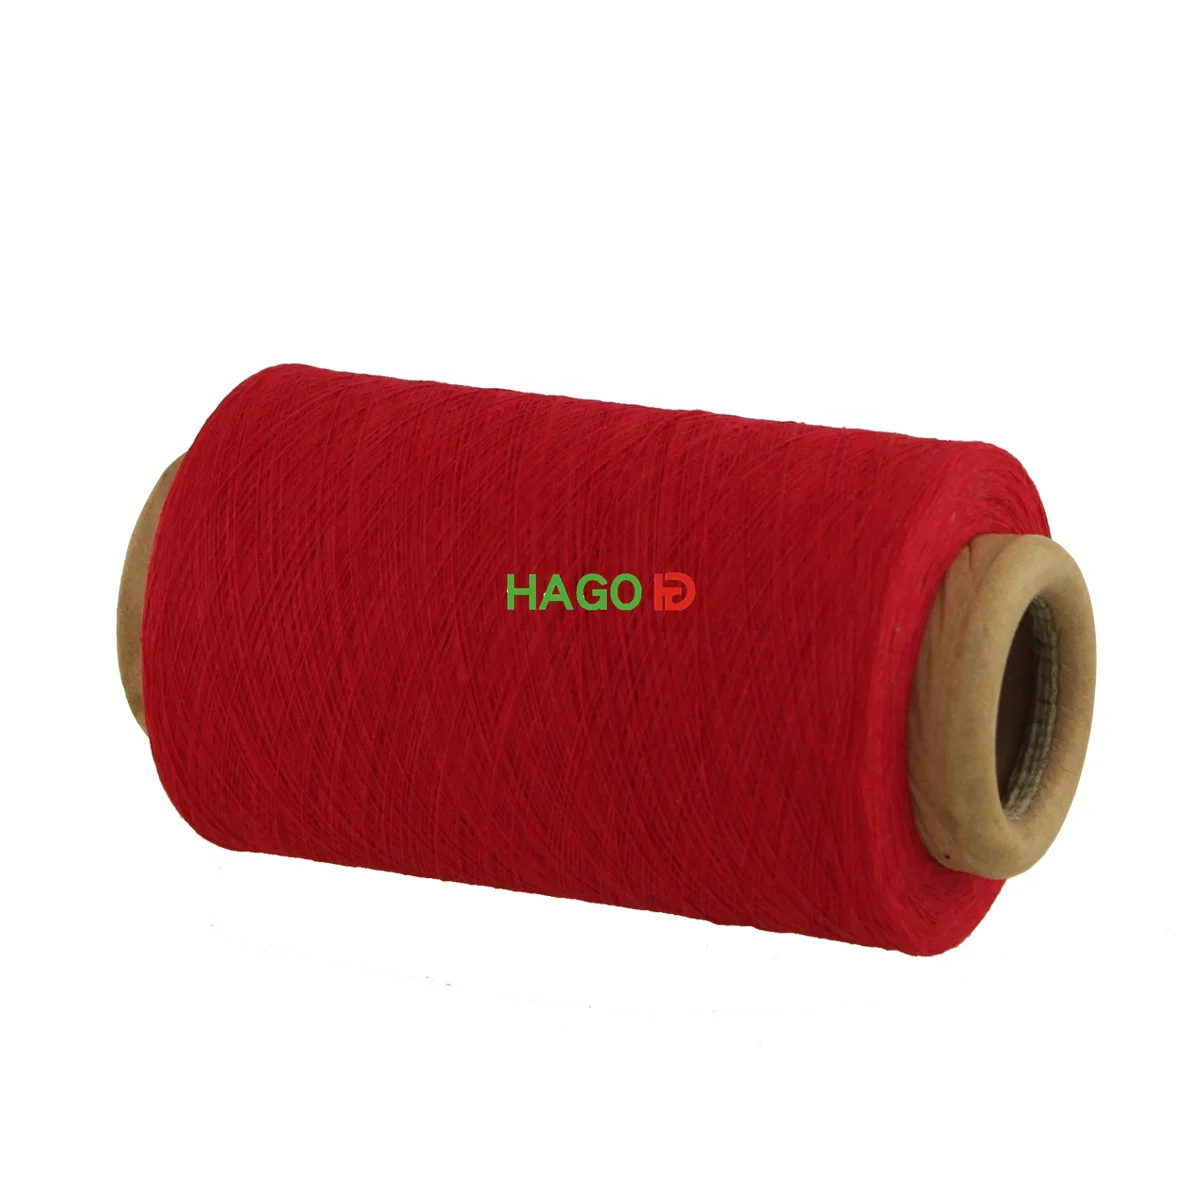 
Hago 300D DTY Microfiber Polyester Mop yarn for Mop Head 